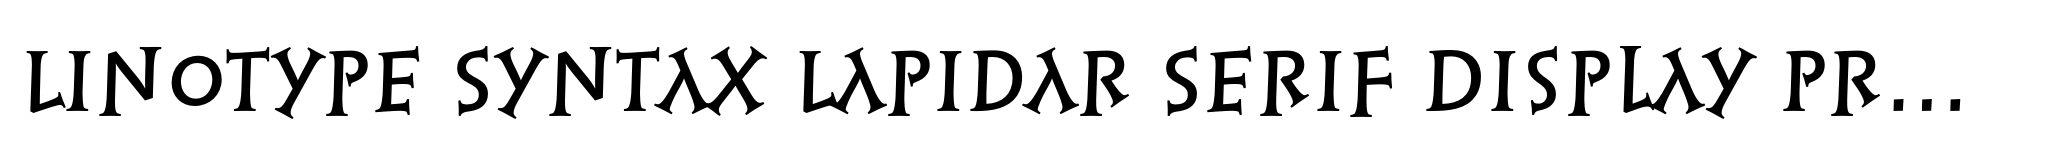 Linotype Syntax Lapidar Serif Display Pro Medium image